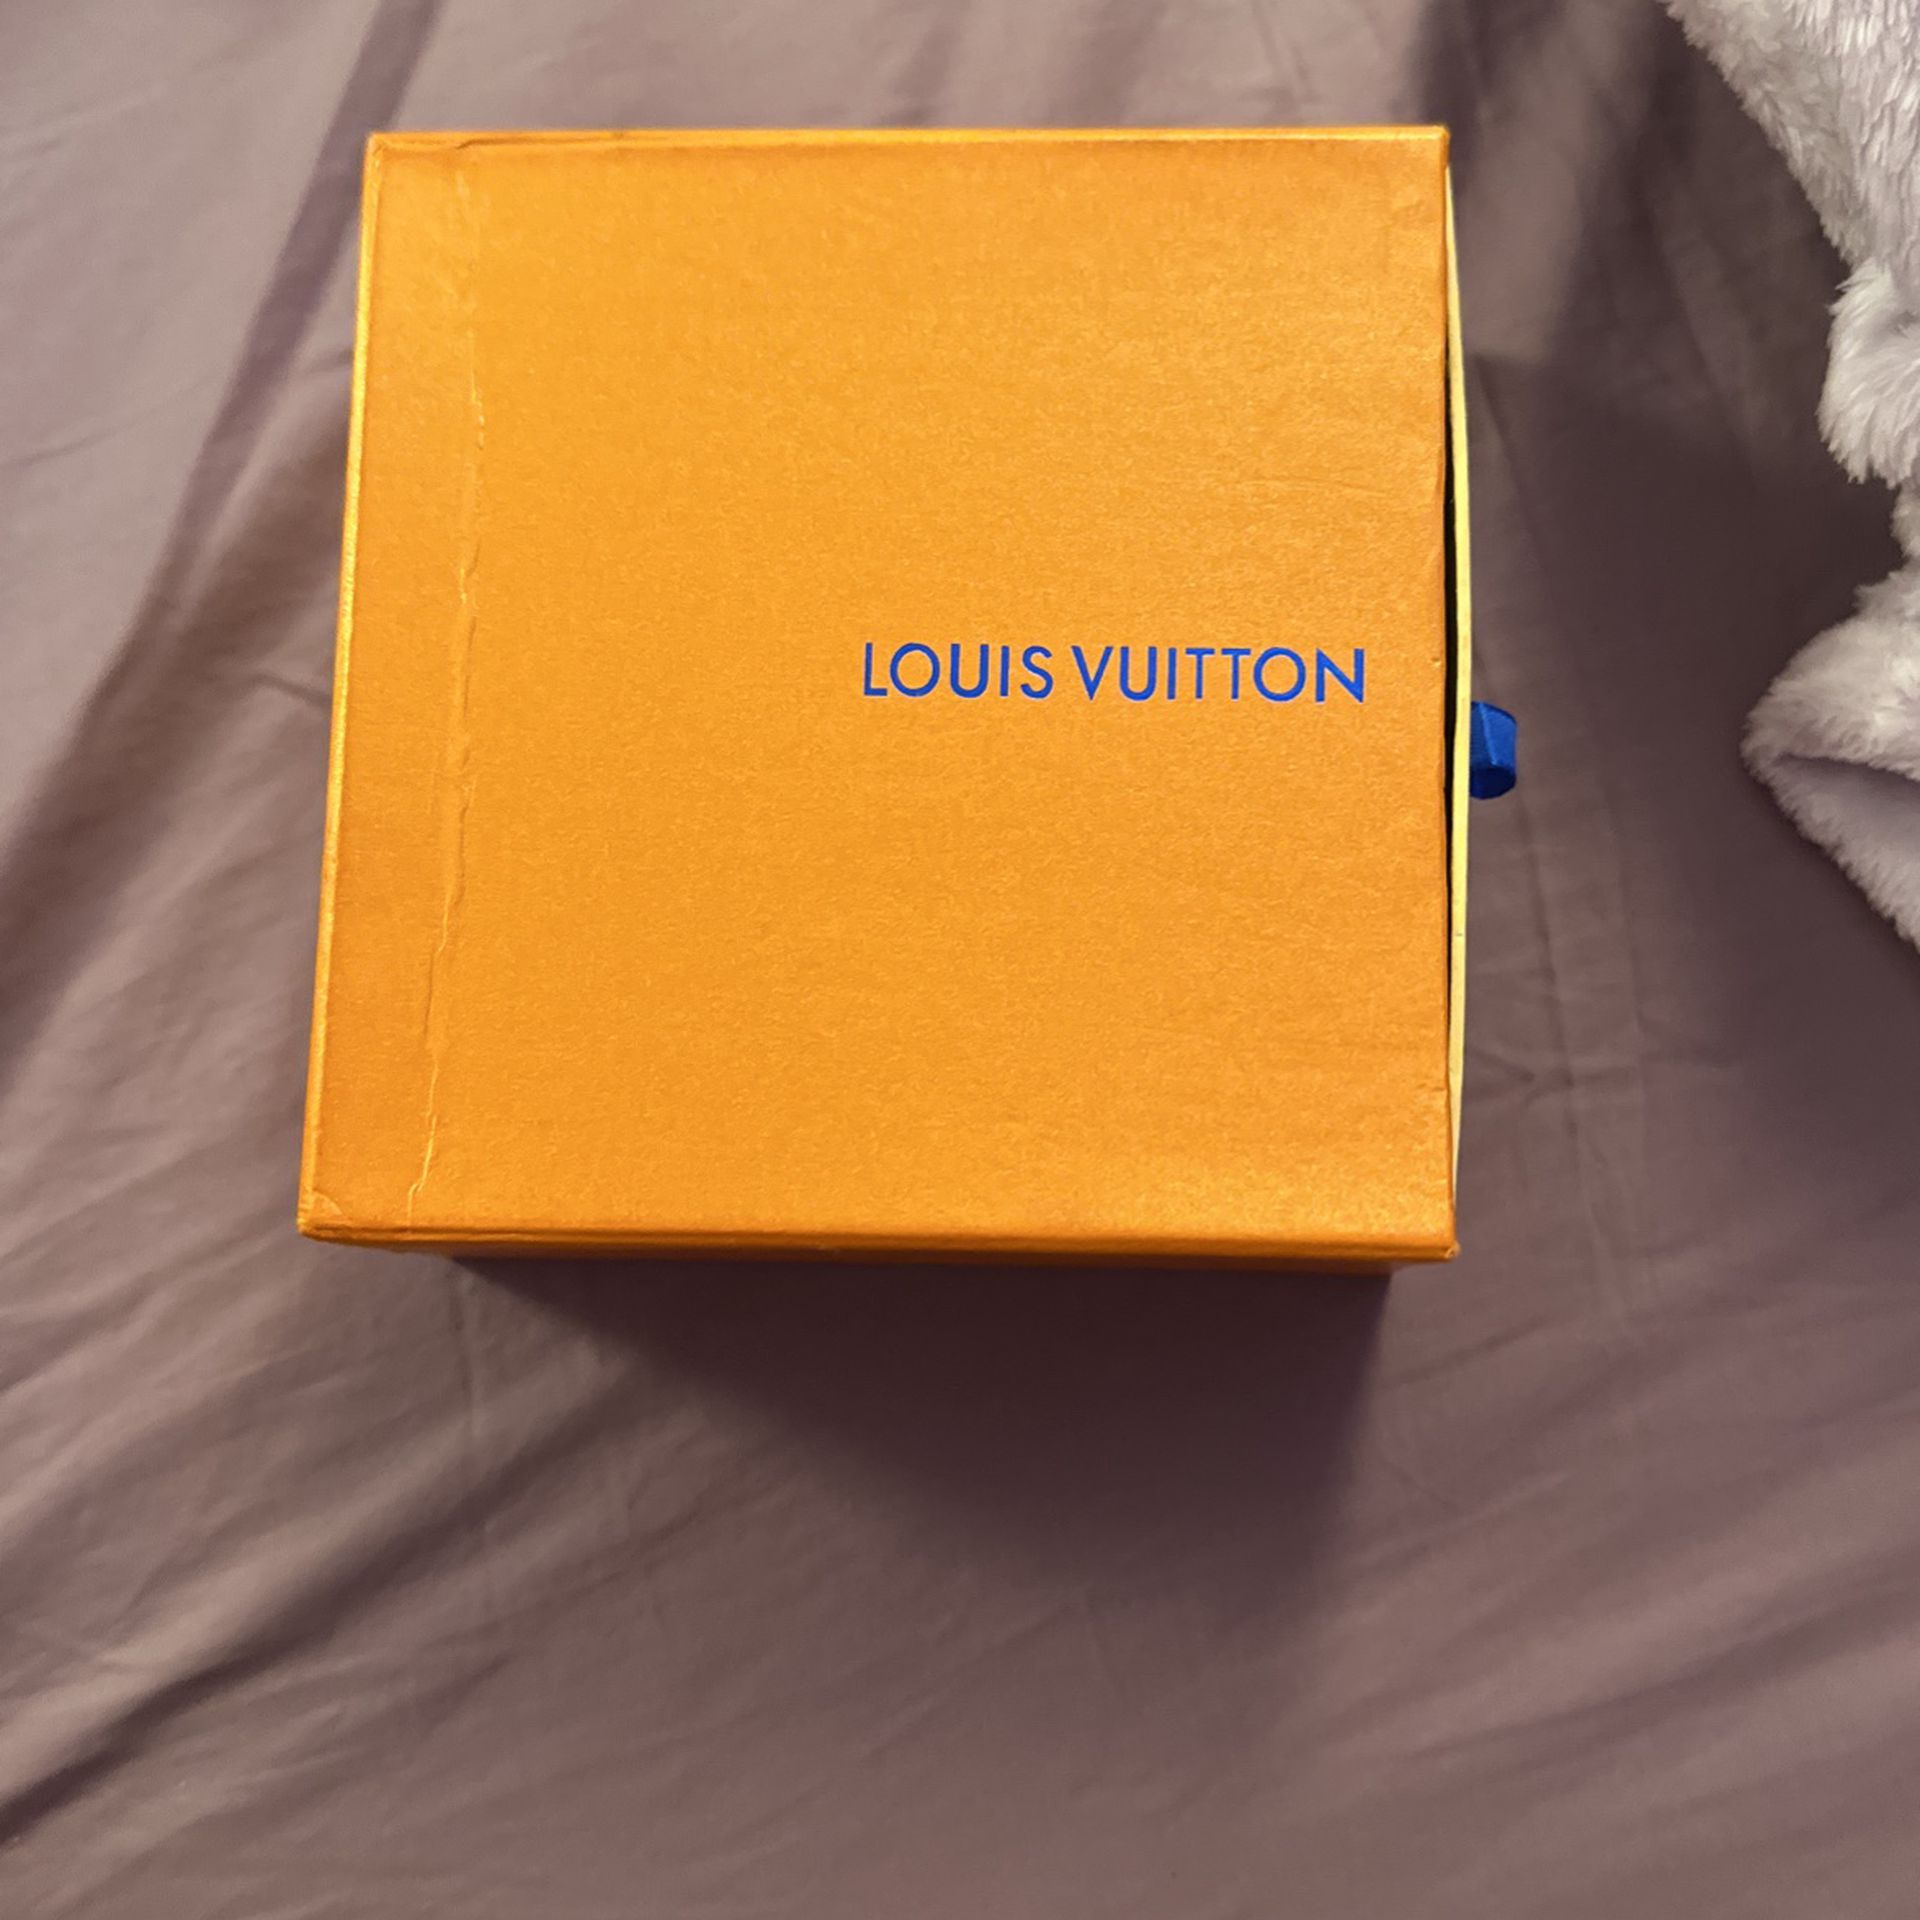 Louis Vuitton Purse for Sale in Fontana, CA - OfferUp